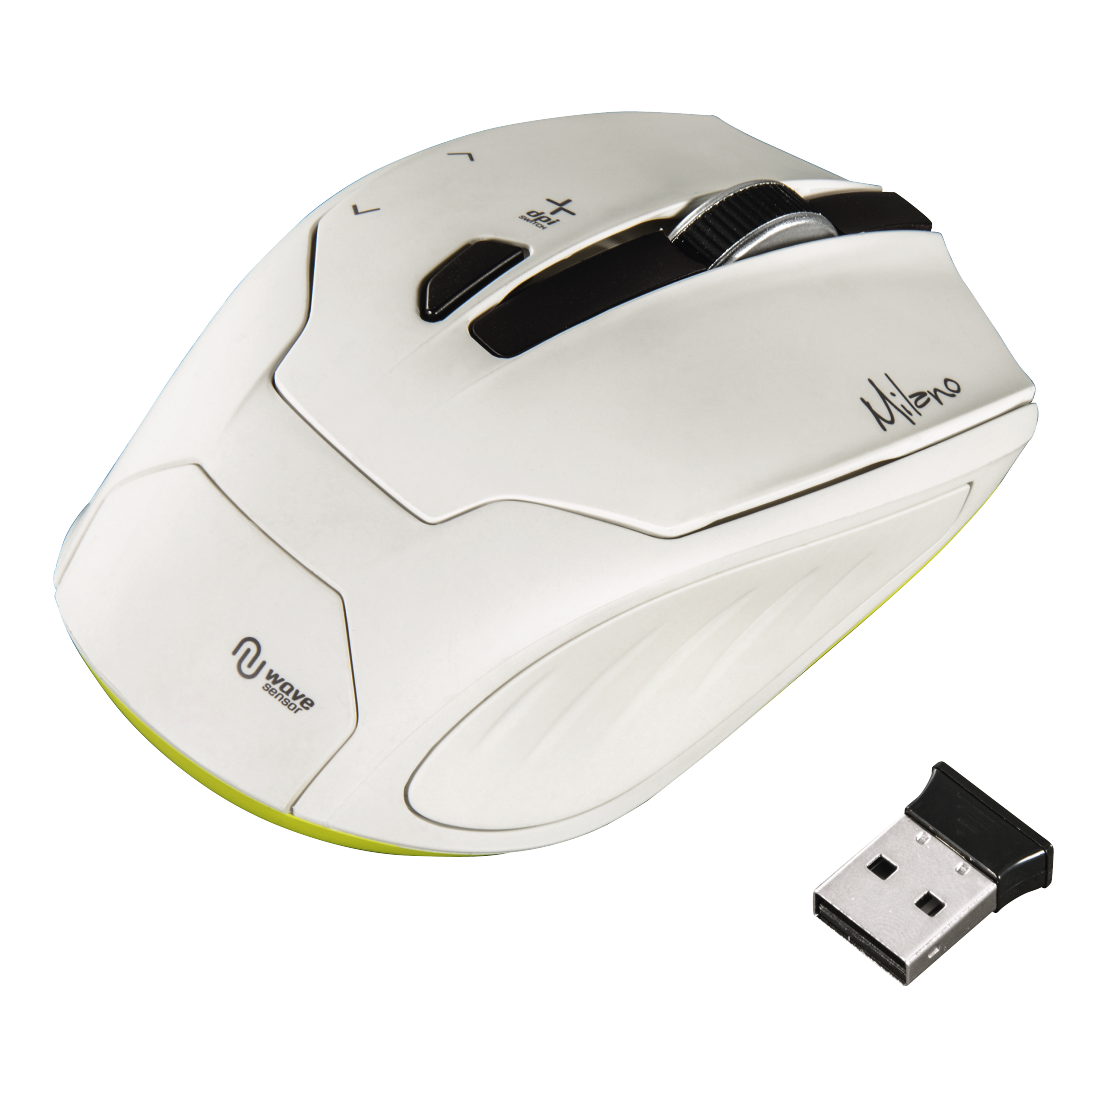 Hama "Milano" Compact Wireless Mouse, white